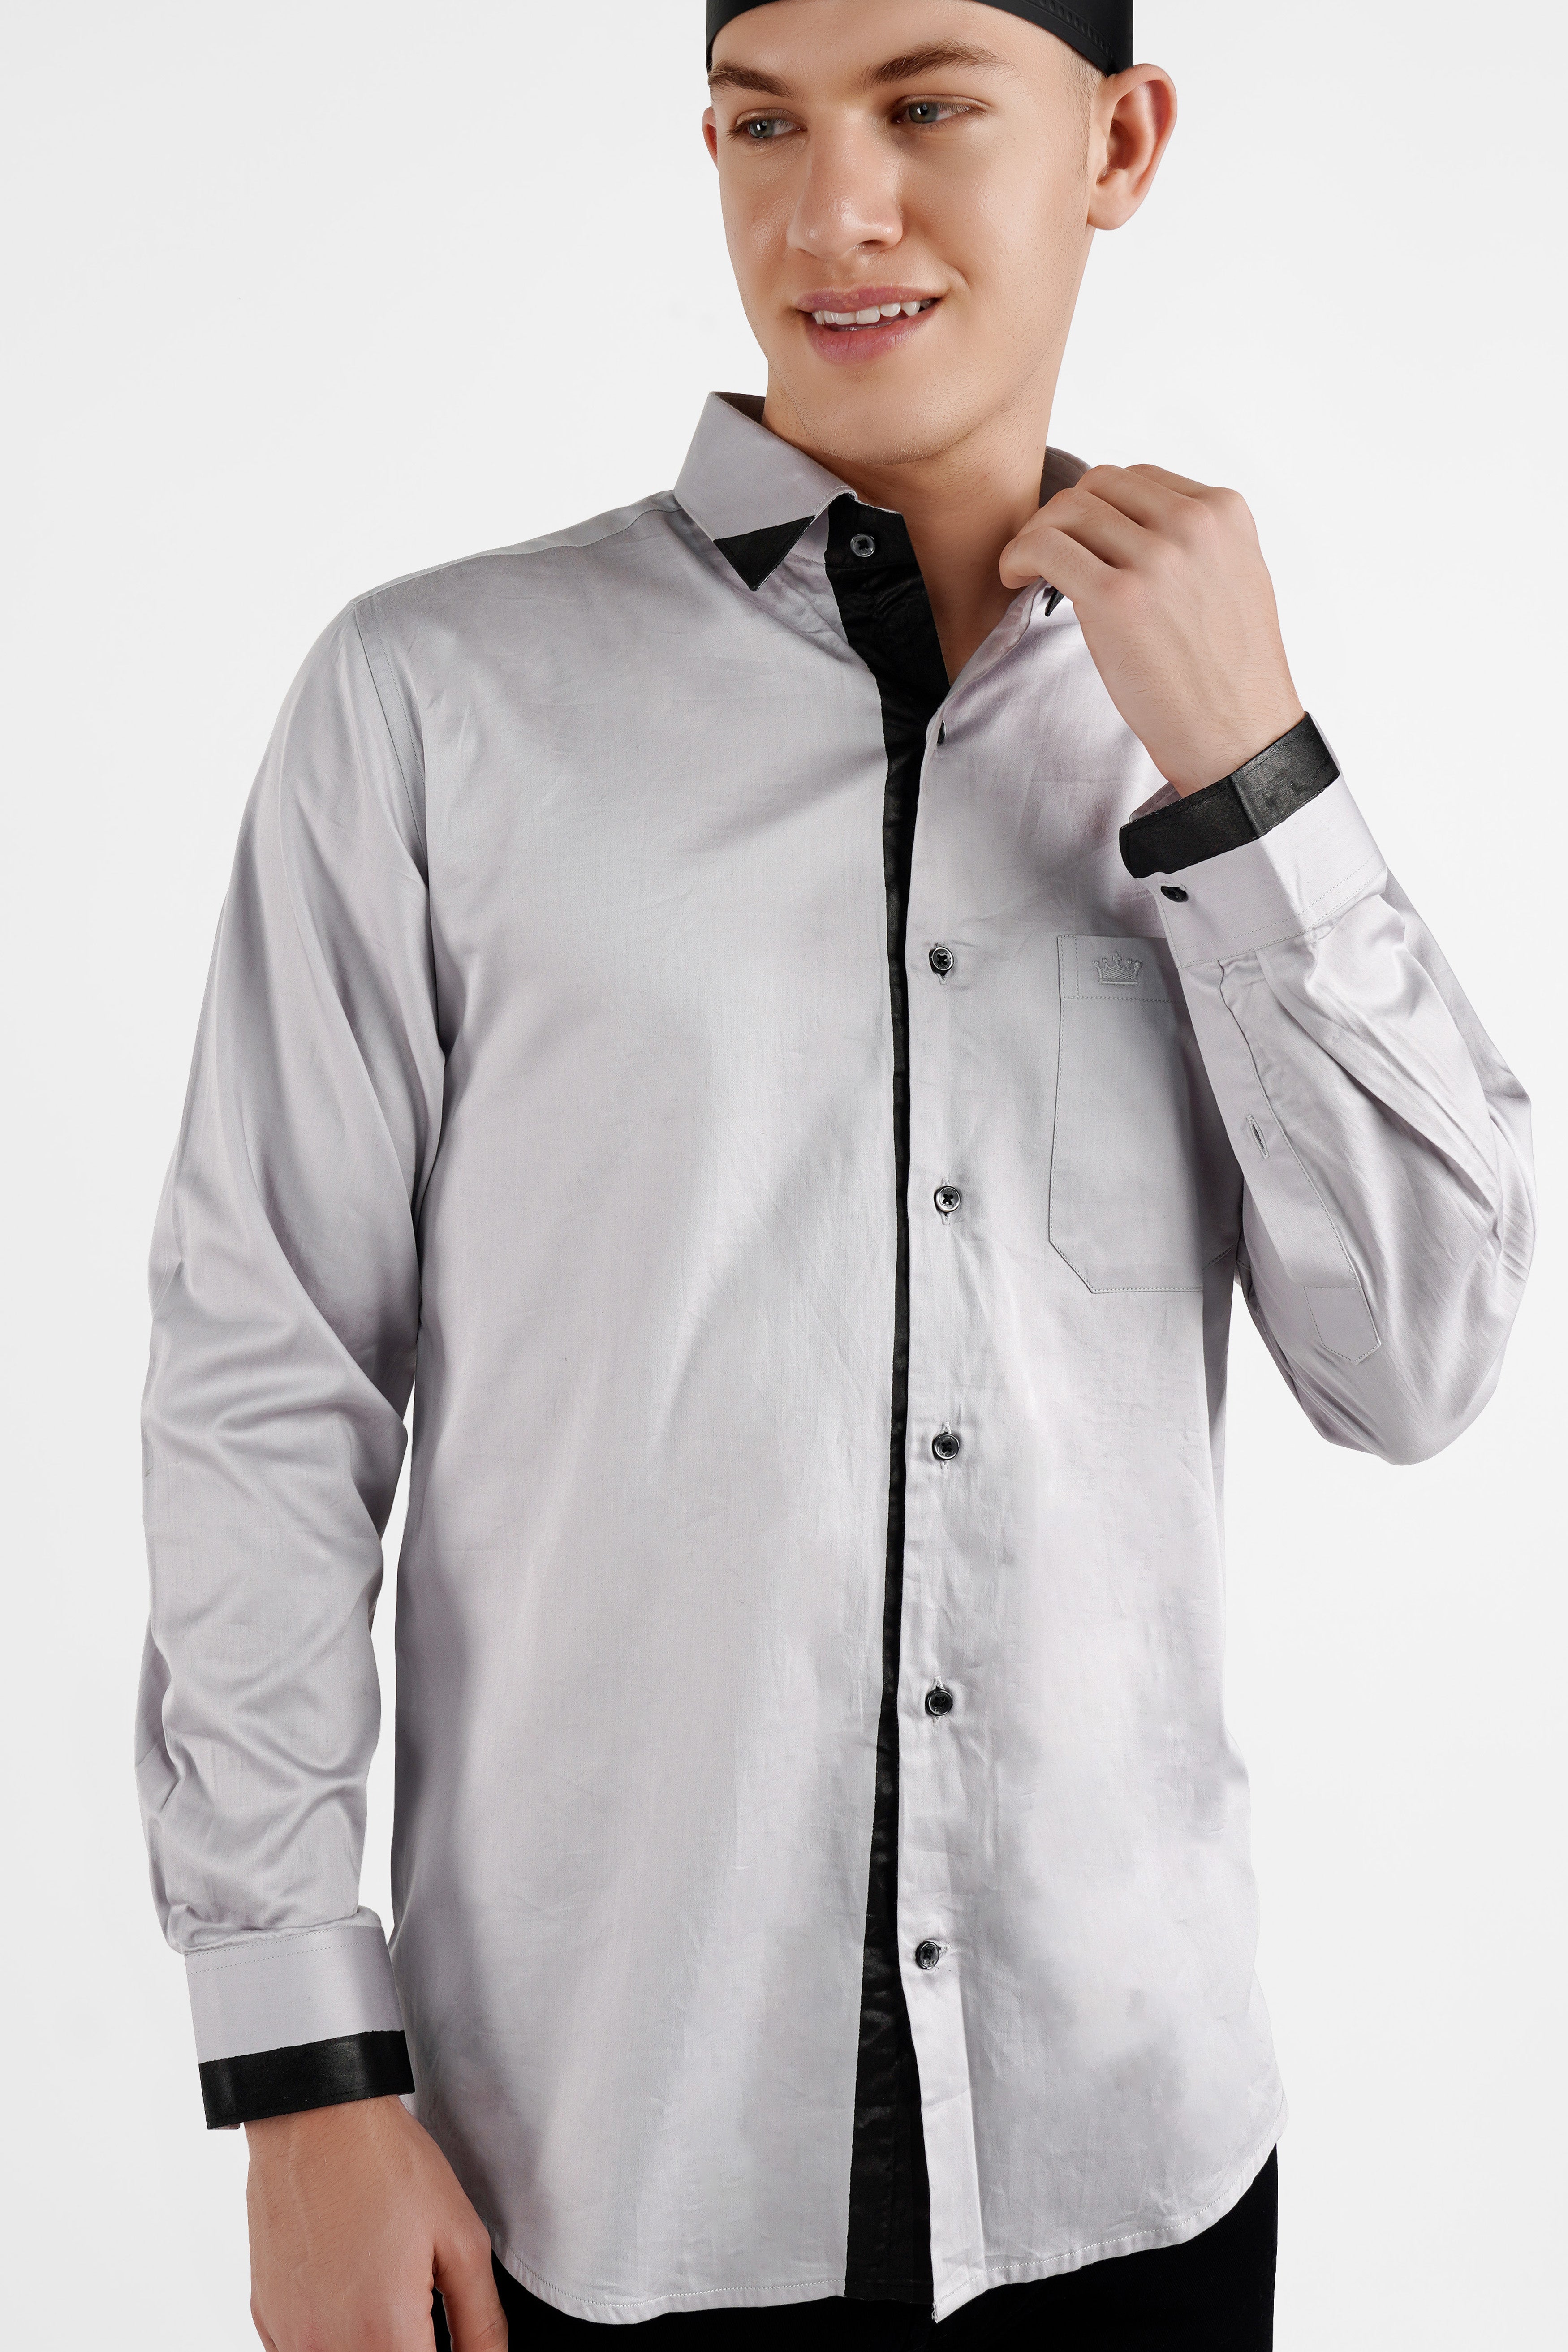 Cloud Gray with Black Hand Painted Super Soft Premium Cotton Designer Shirt